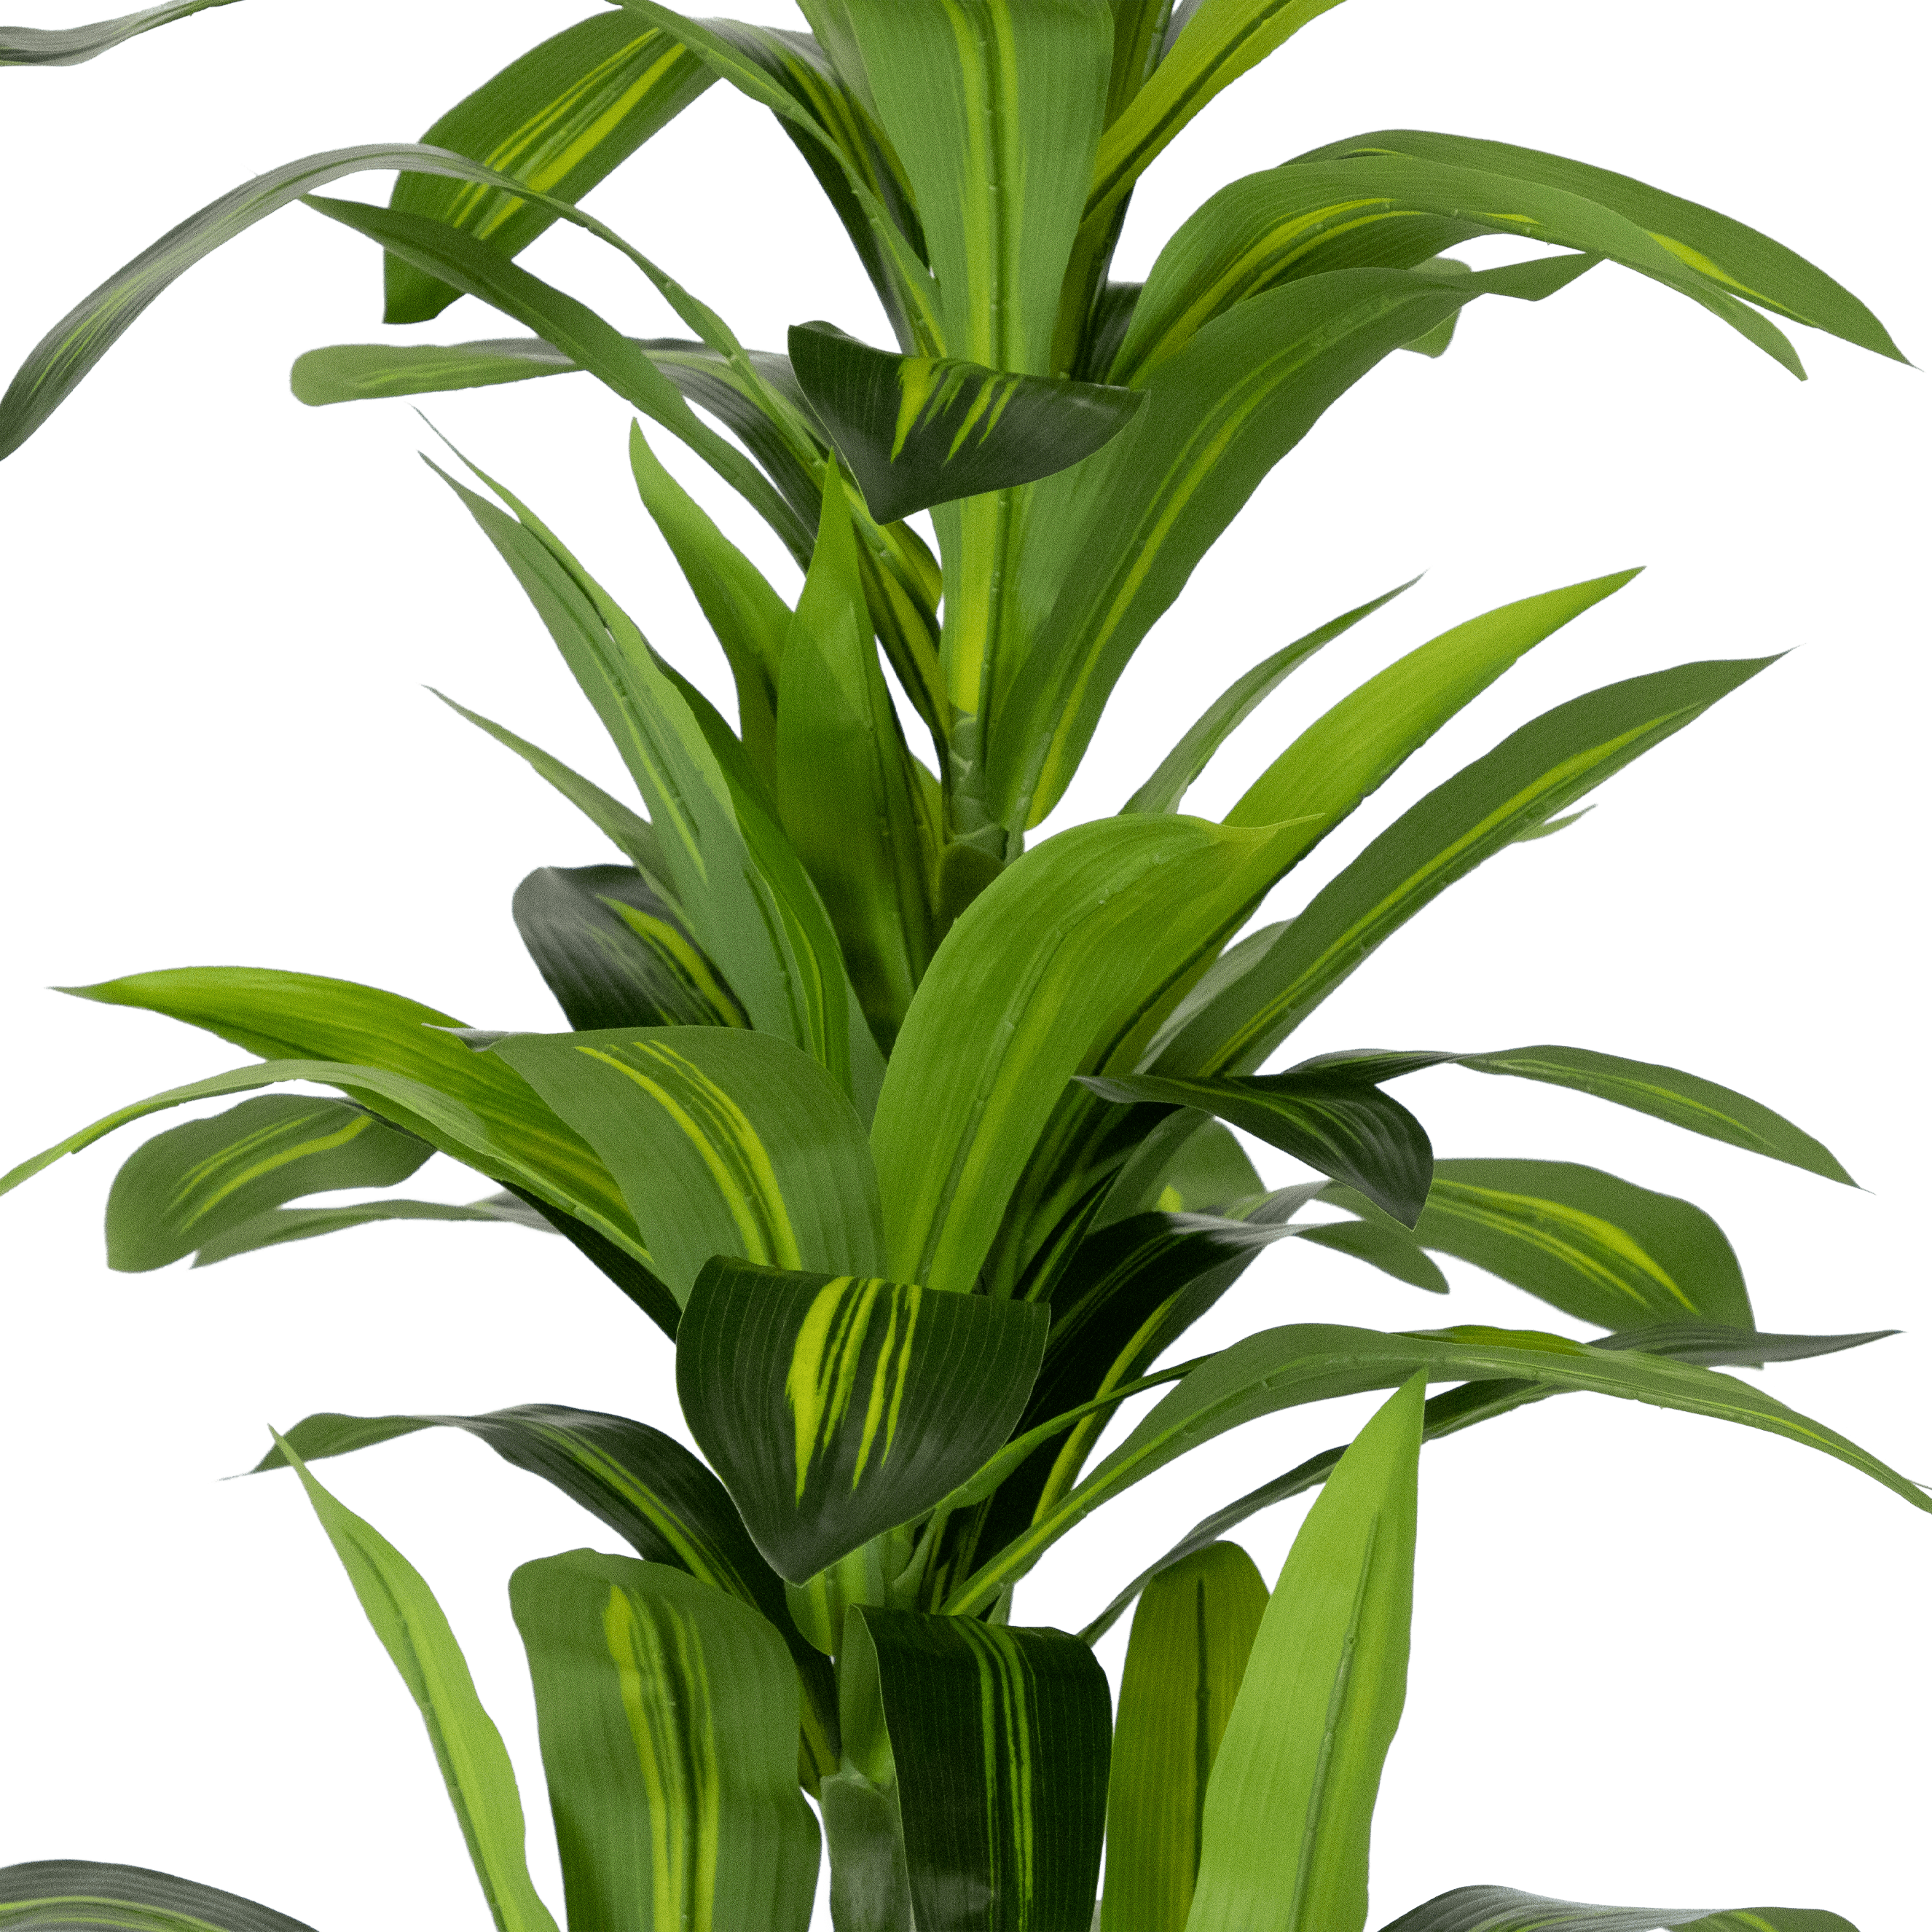 Dracaena plant 150cm